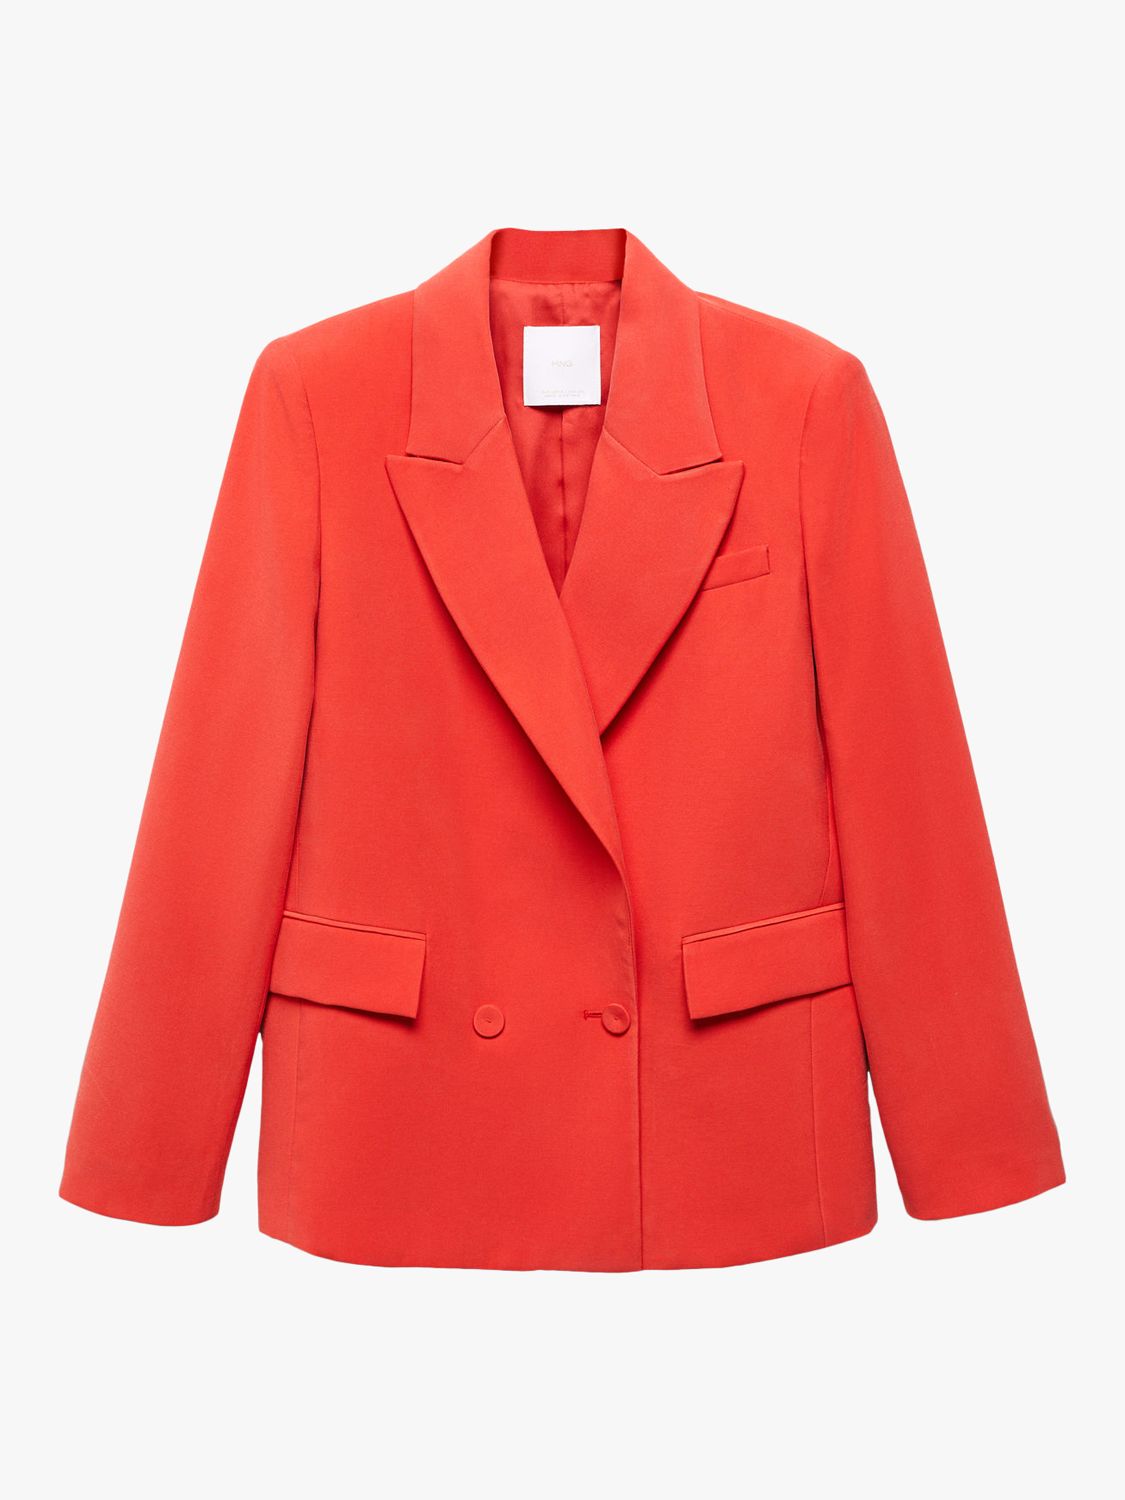 Mango Tempo Double Breasted Suit Blazer, Bright Red, XXS